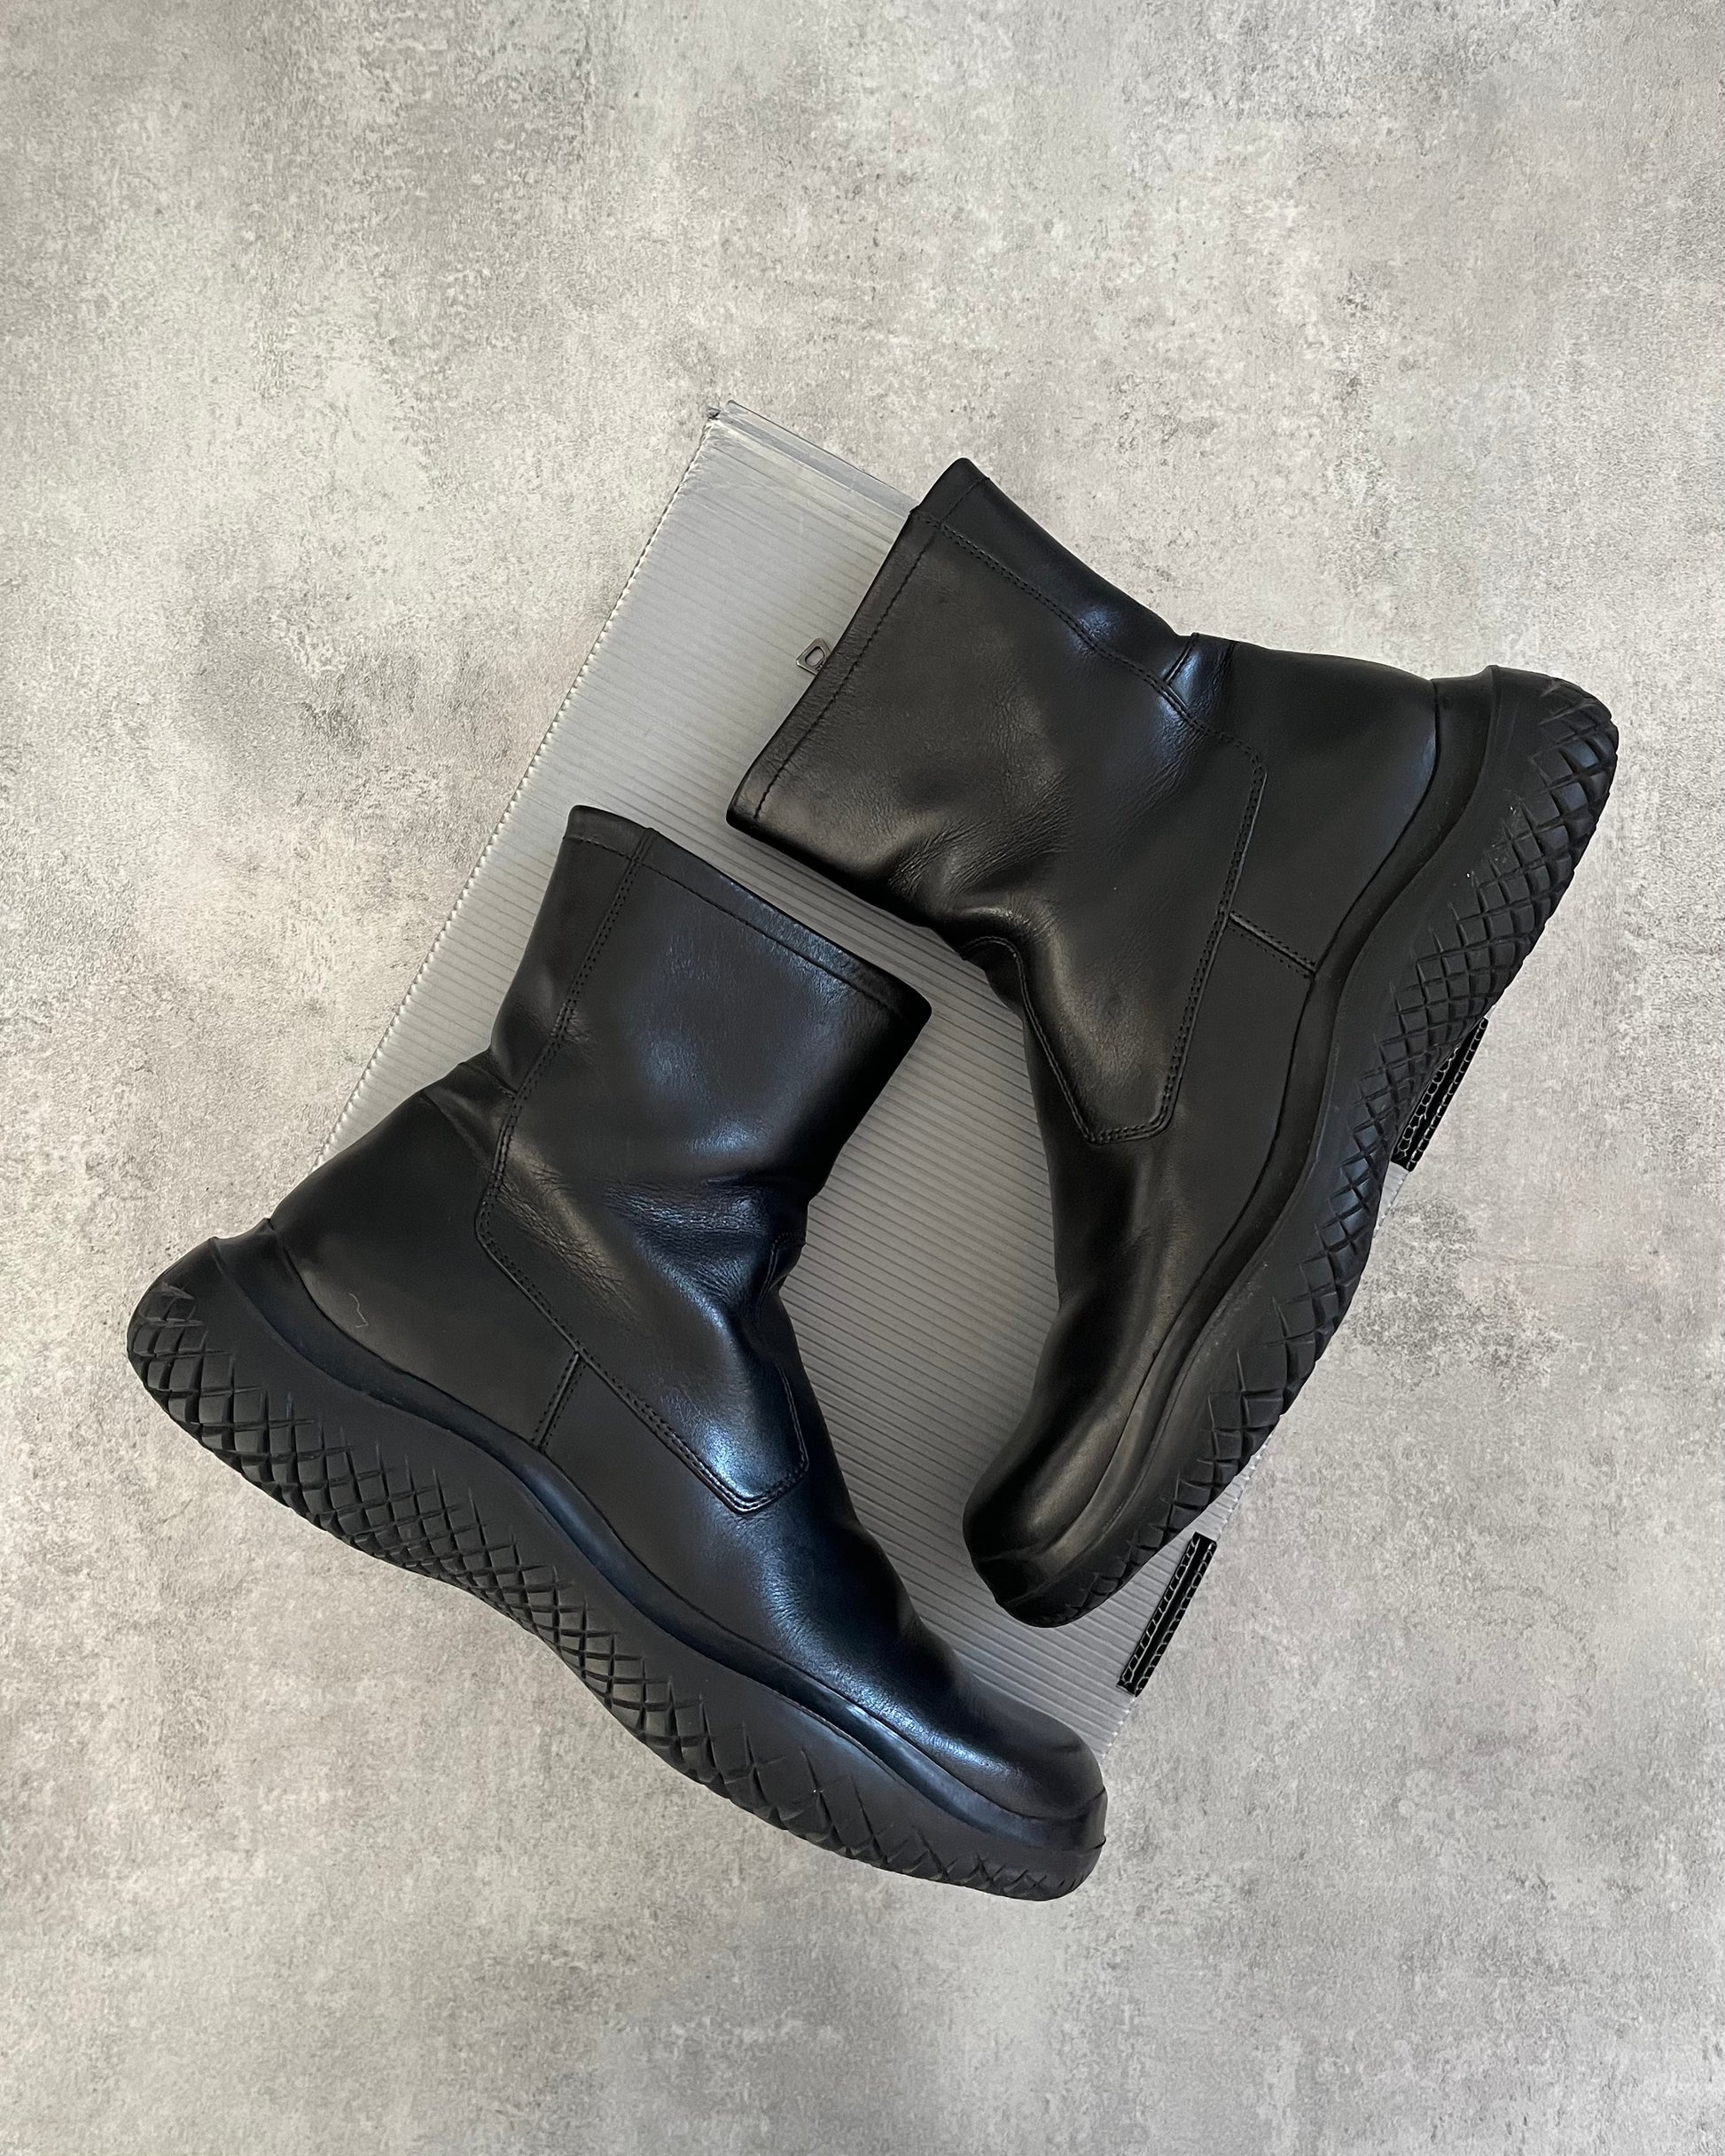 FW1999 Prada Ankle Vibram Leather Boots (40.5eu/us7.5) (40.5) - 1